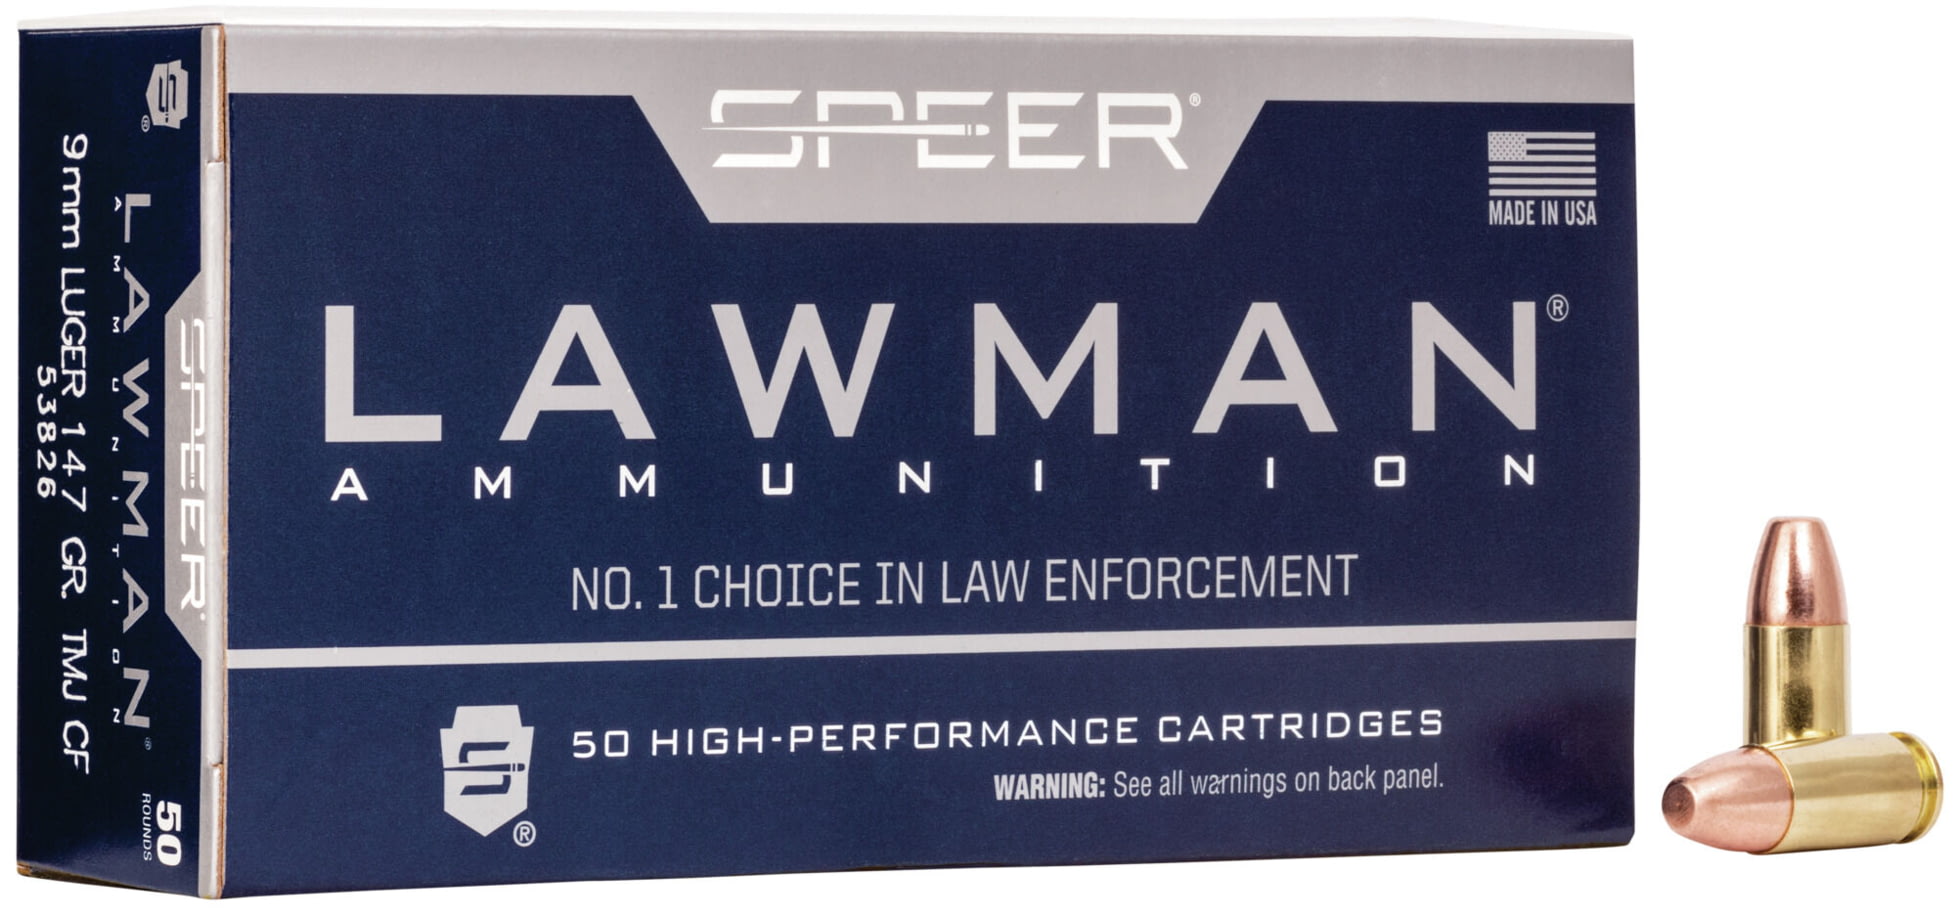 Speer Lawman Handgun CleanFire Training 9mm Luger 147 grain Total Metal Jacket Centerfire Pistol Ammunition